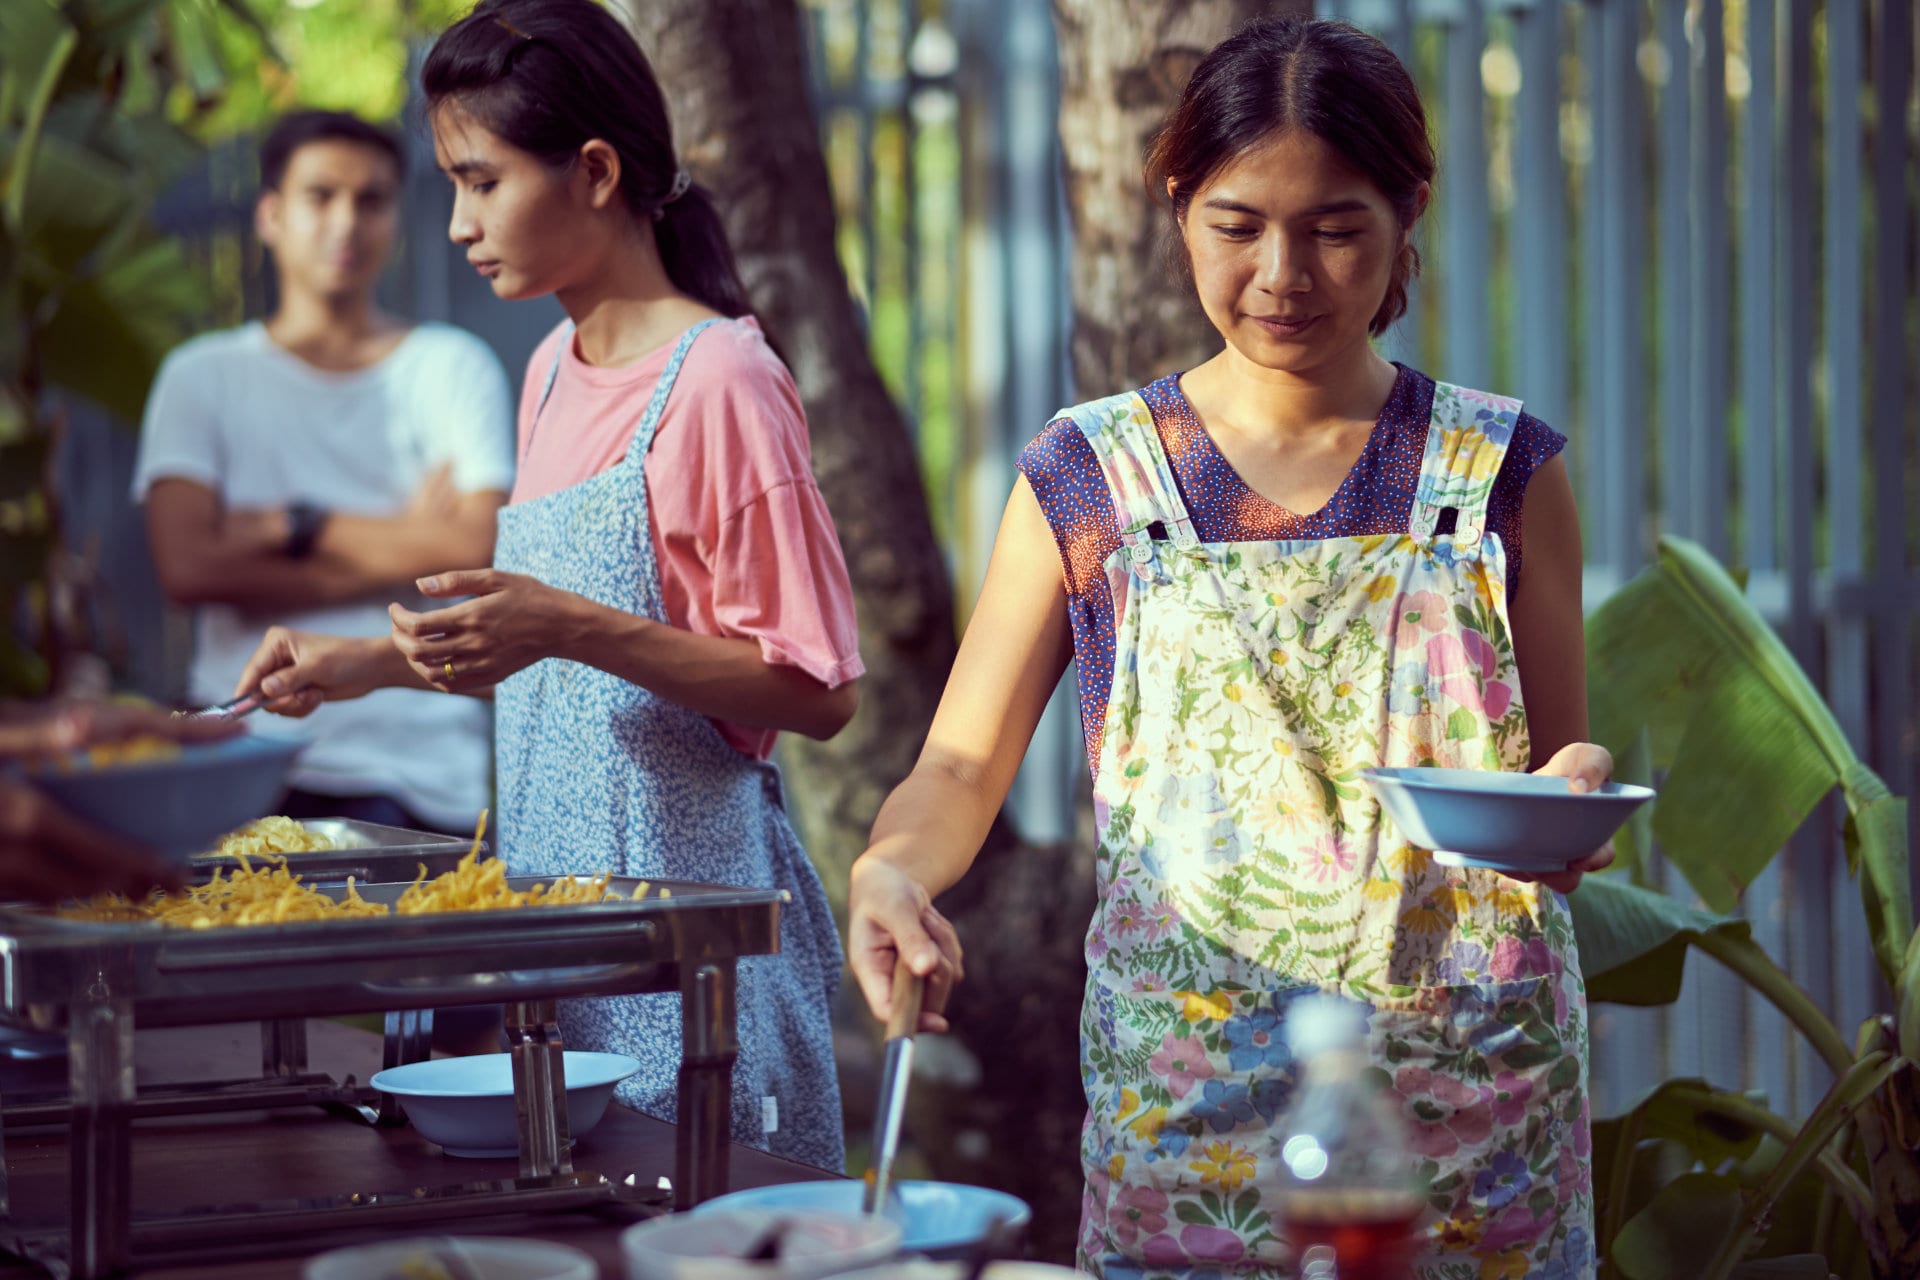 Kulinarne historie: Posiłek na planie (reż. Pen-ek Ratanaruang)/fot. materiały prasowe